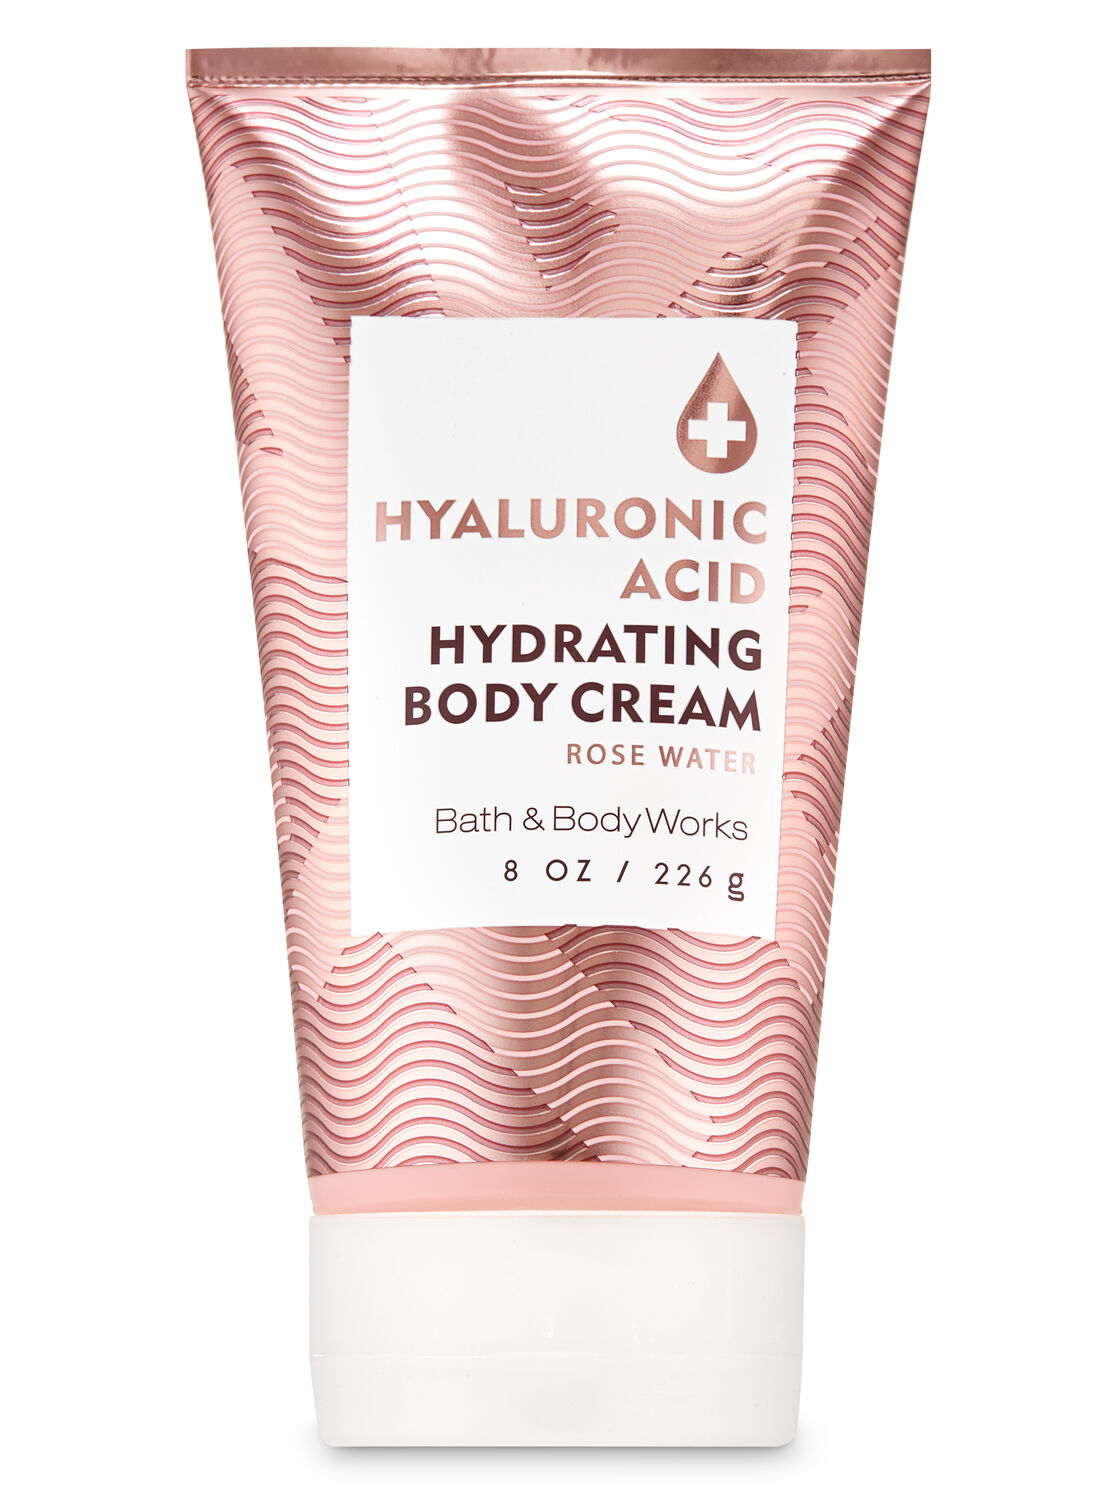 Rose Water Hyaluronic Acid Hydrating Body Cream